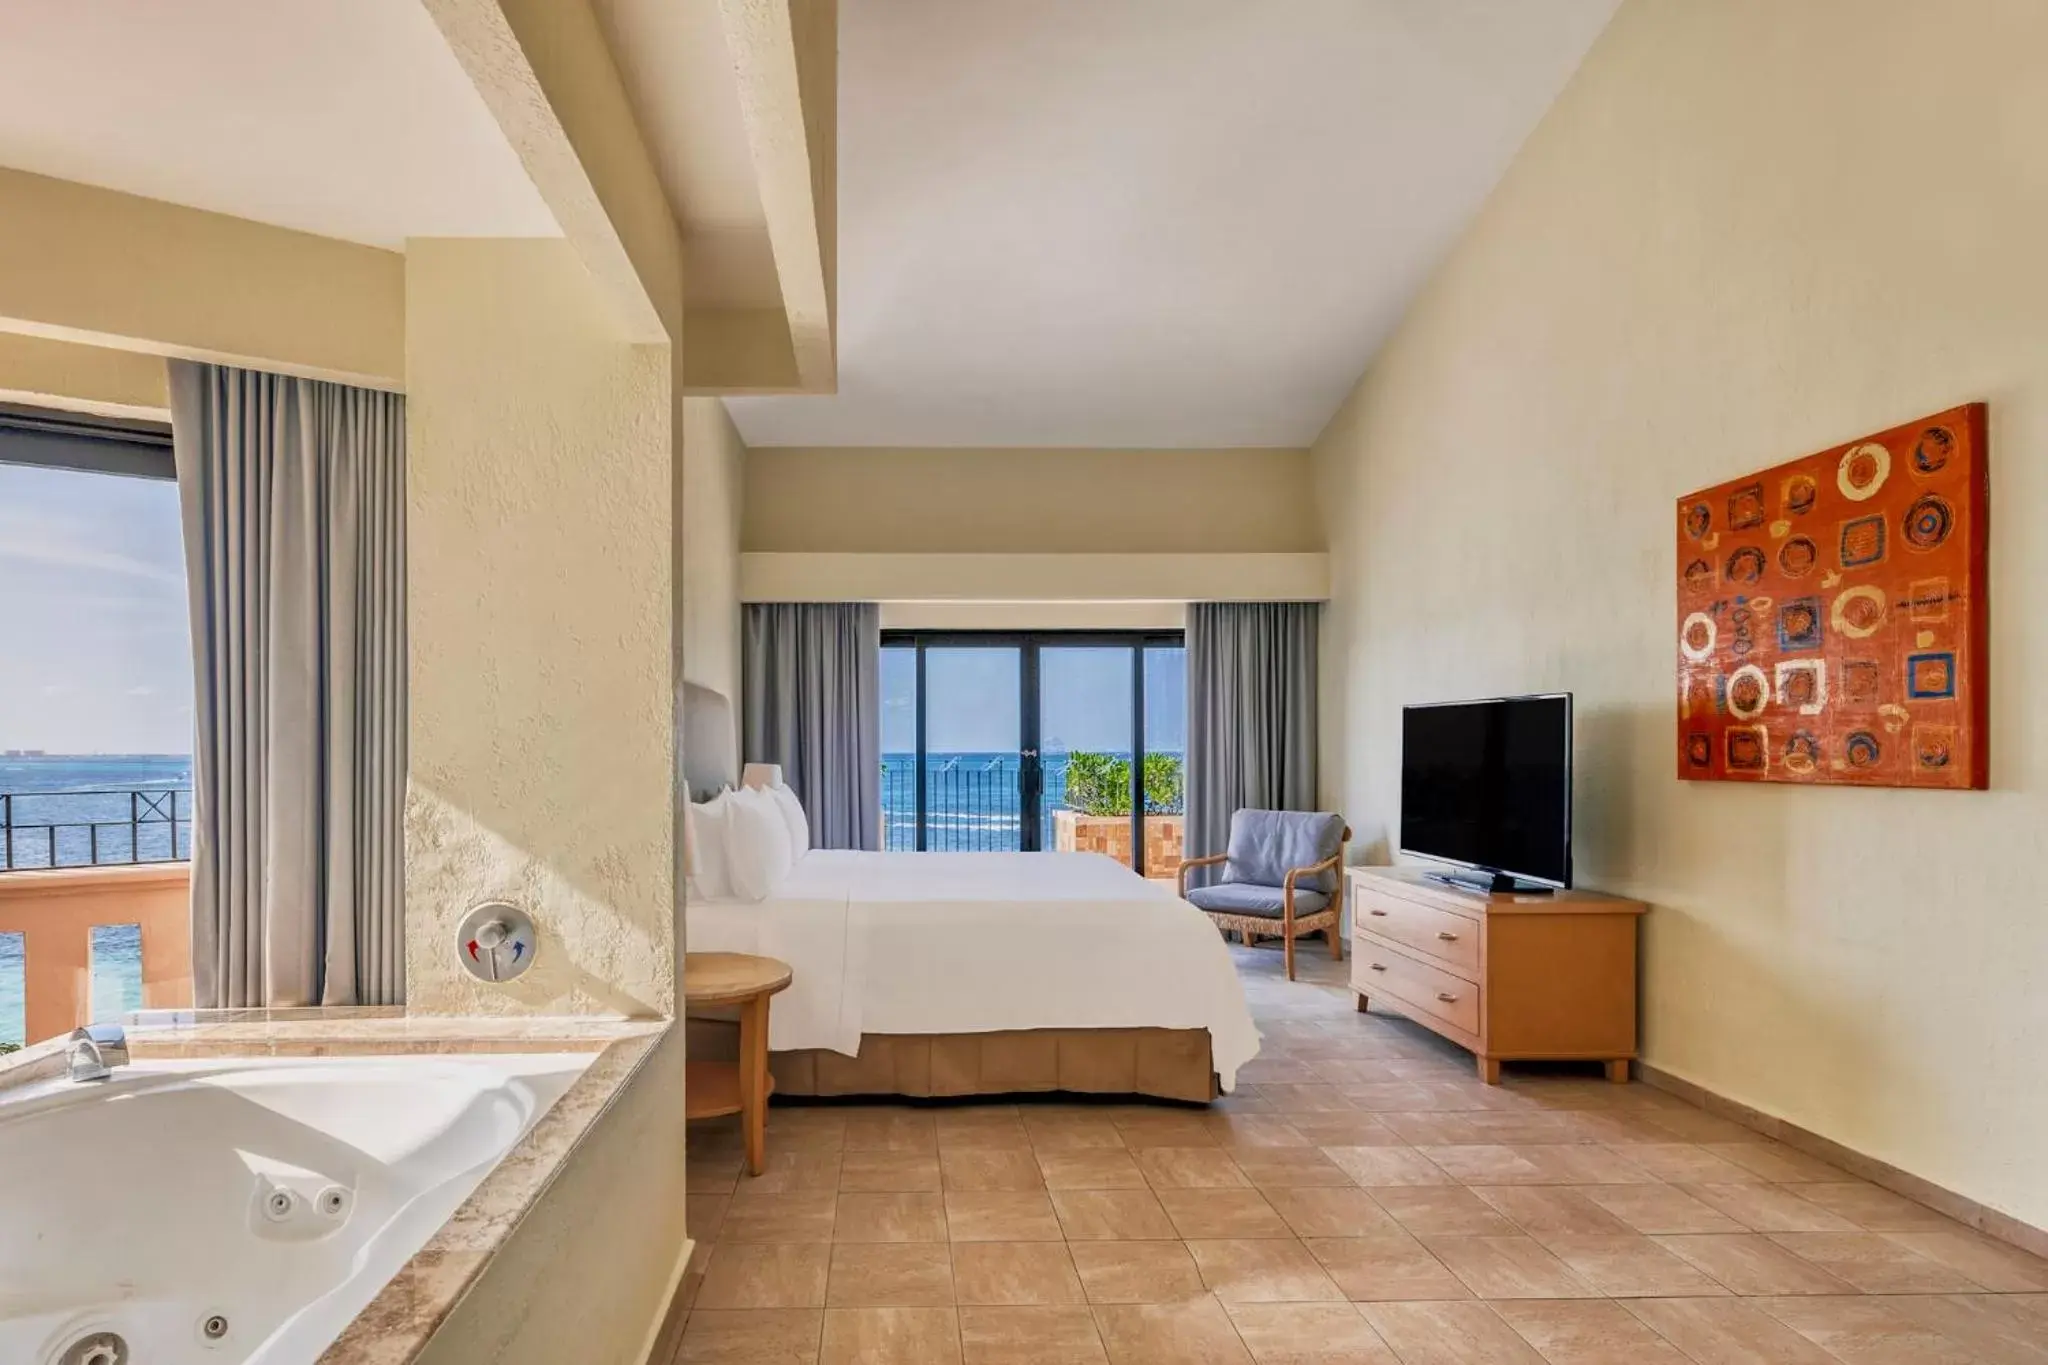 Bedroom in Fiesta Americana Cancun Villas